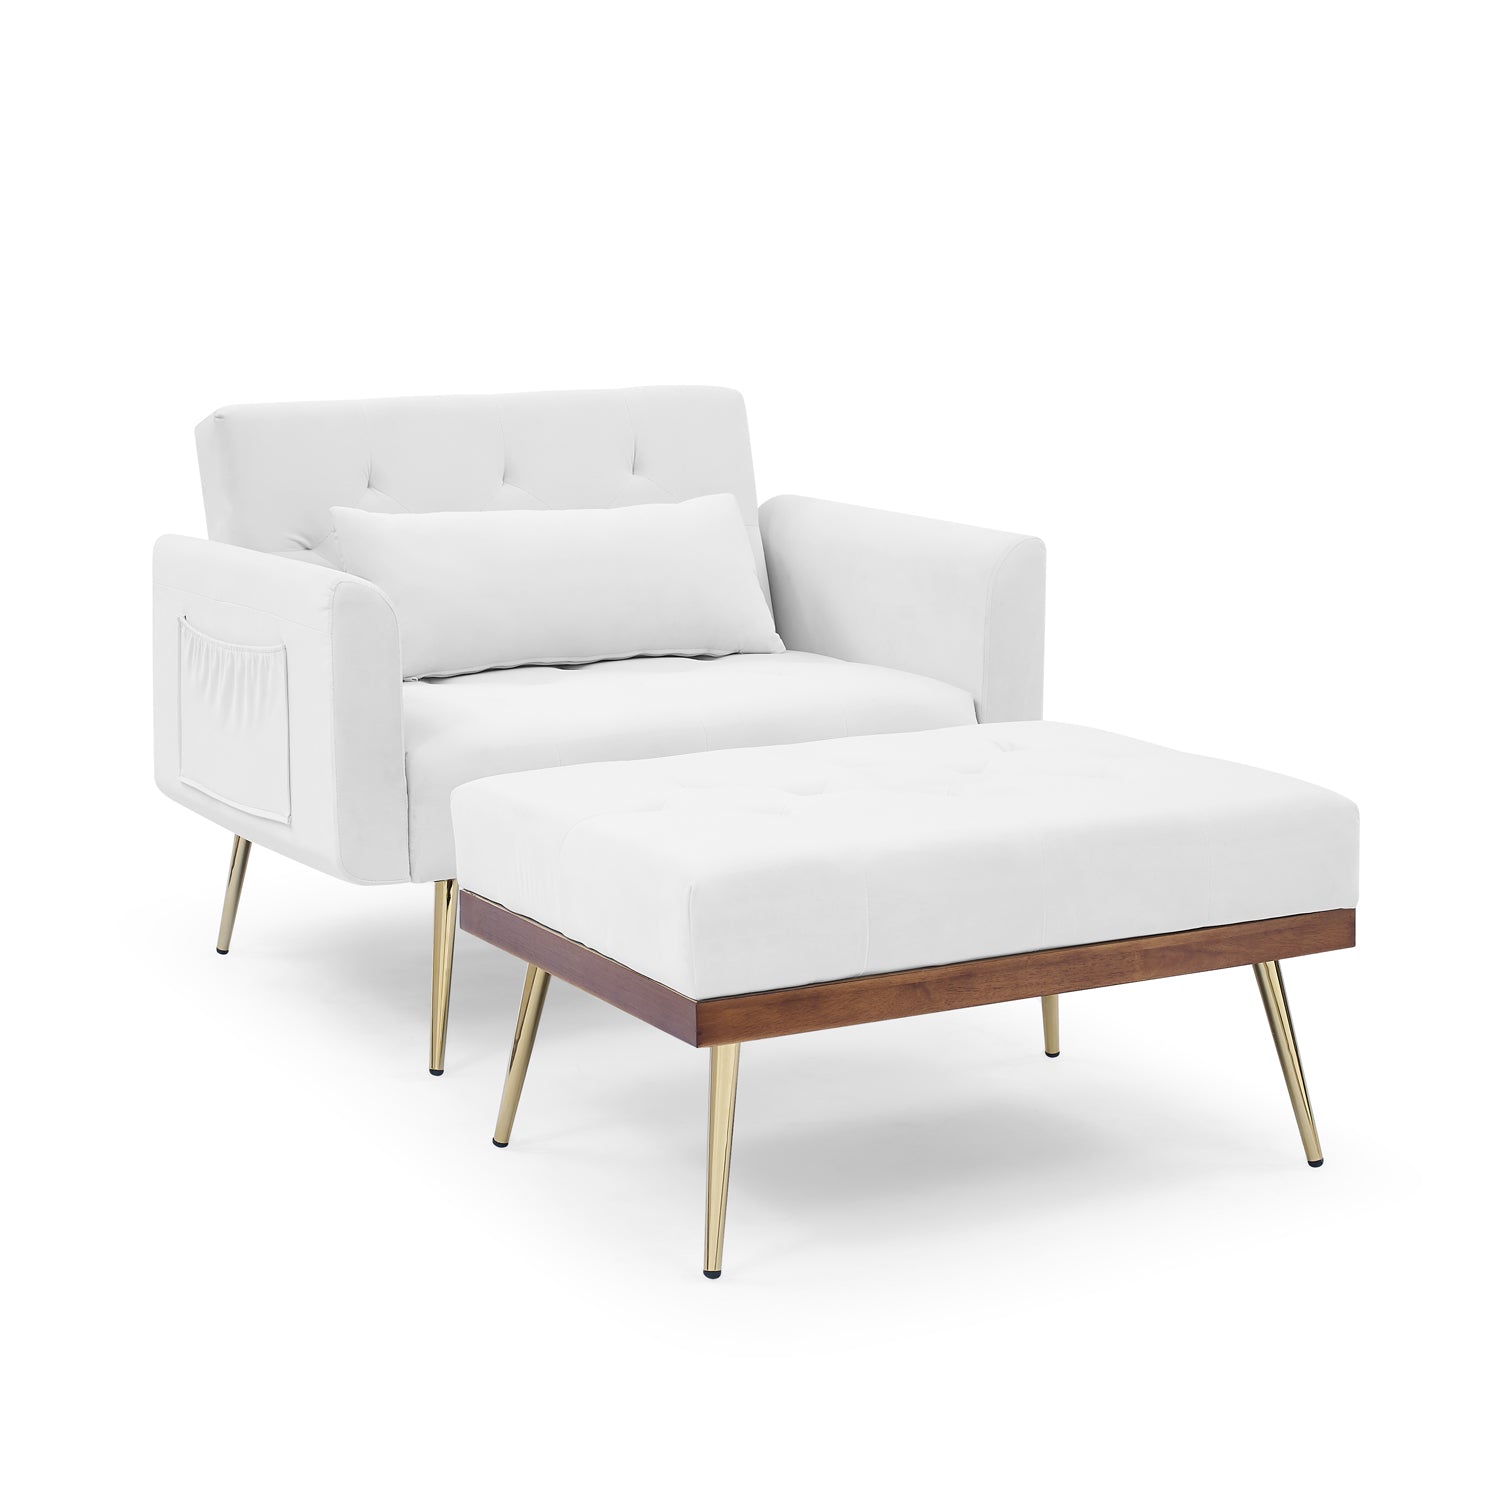 Homio Decor Living Room White / United States Recliner Velvet Sofa-Bed with Ottoman